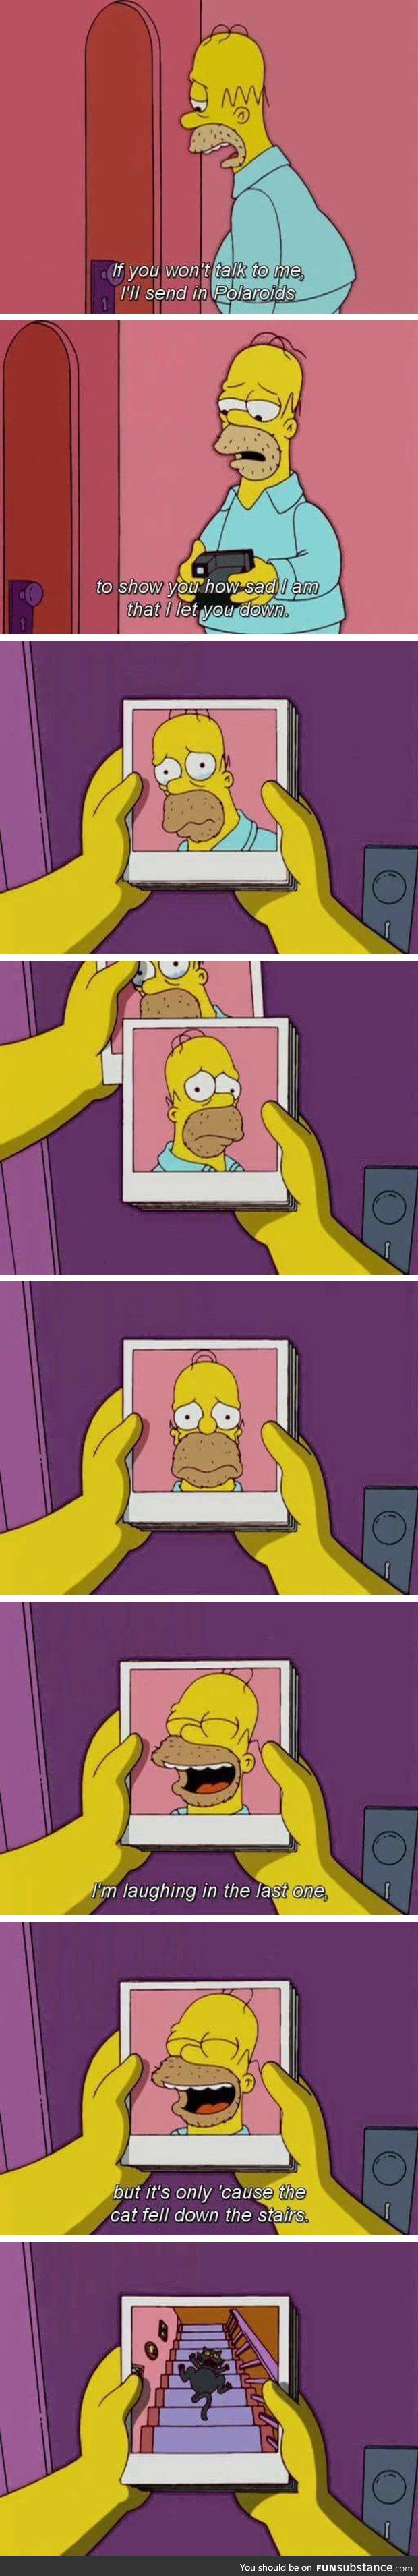 Homer is sad